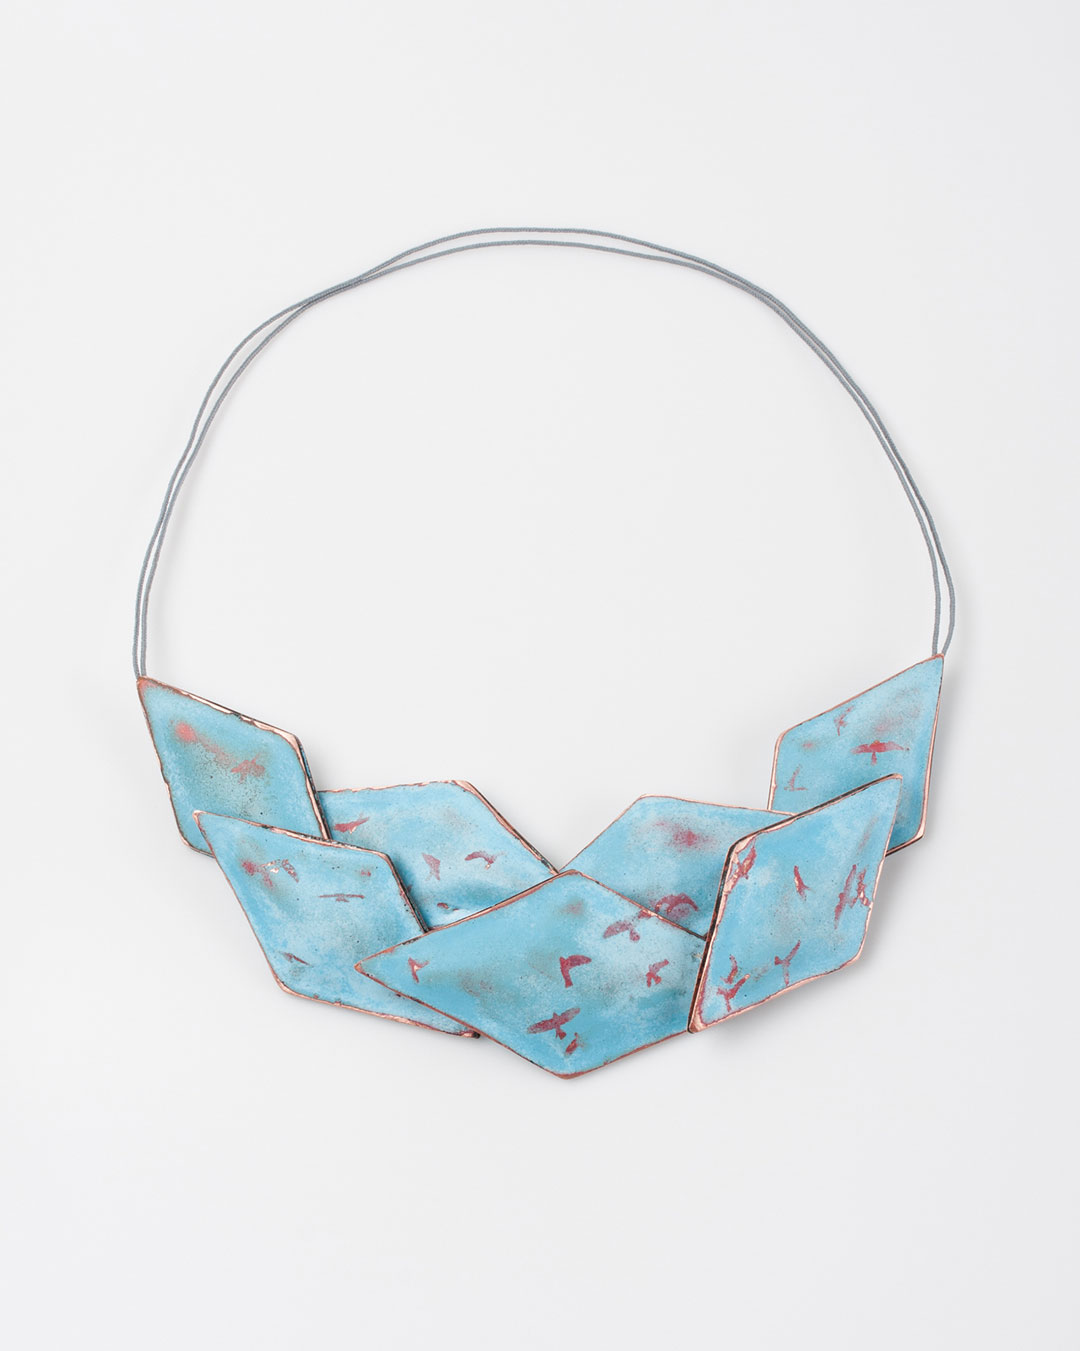 Nicole Beck, My Blue Sky, 2018, necklace; copper, enamel, silver, 200 x 65 x 25 mm, €1650